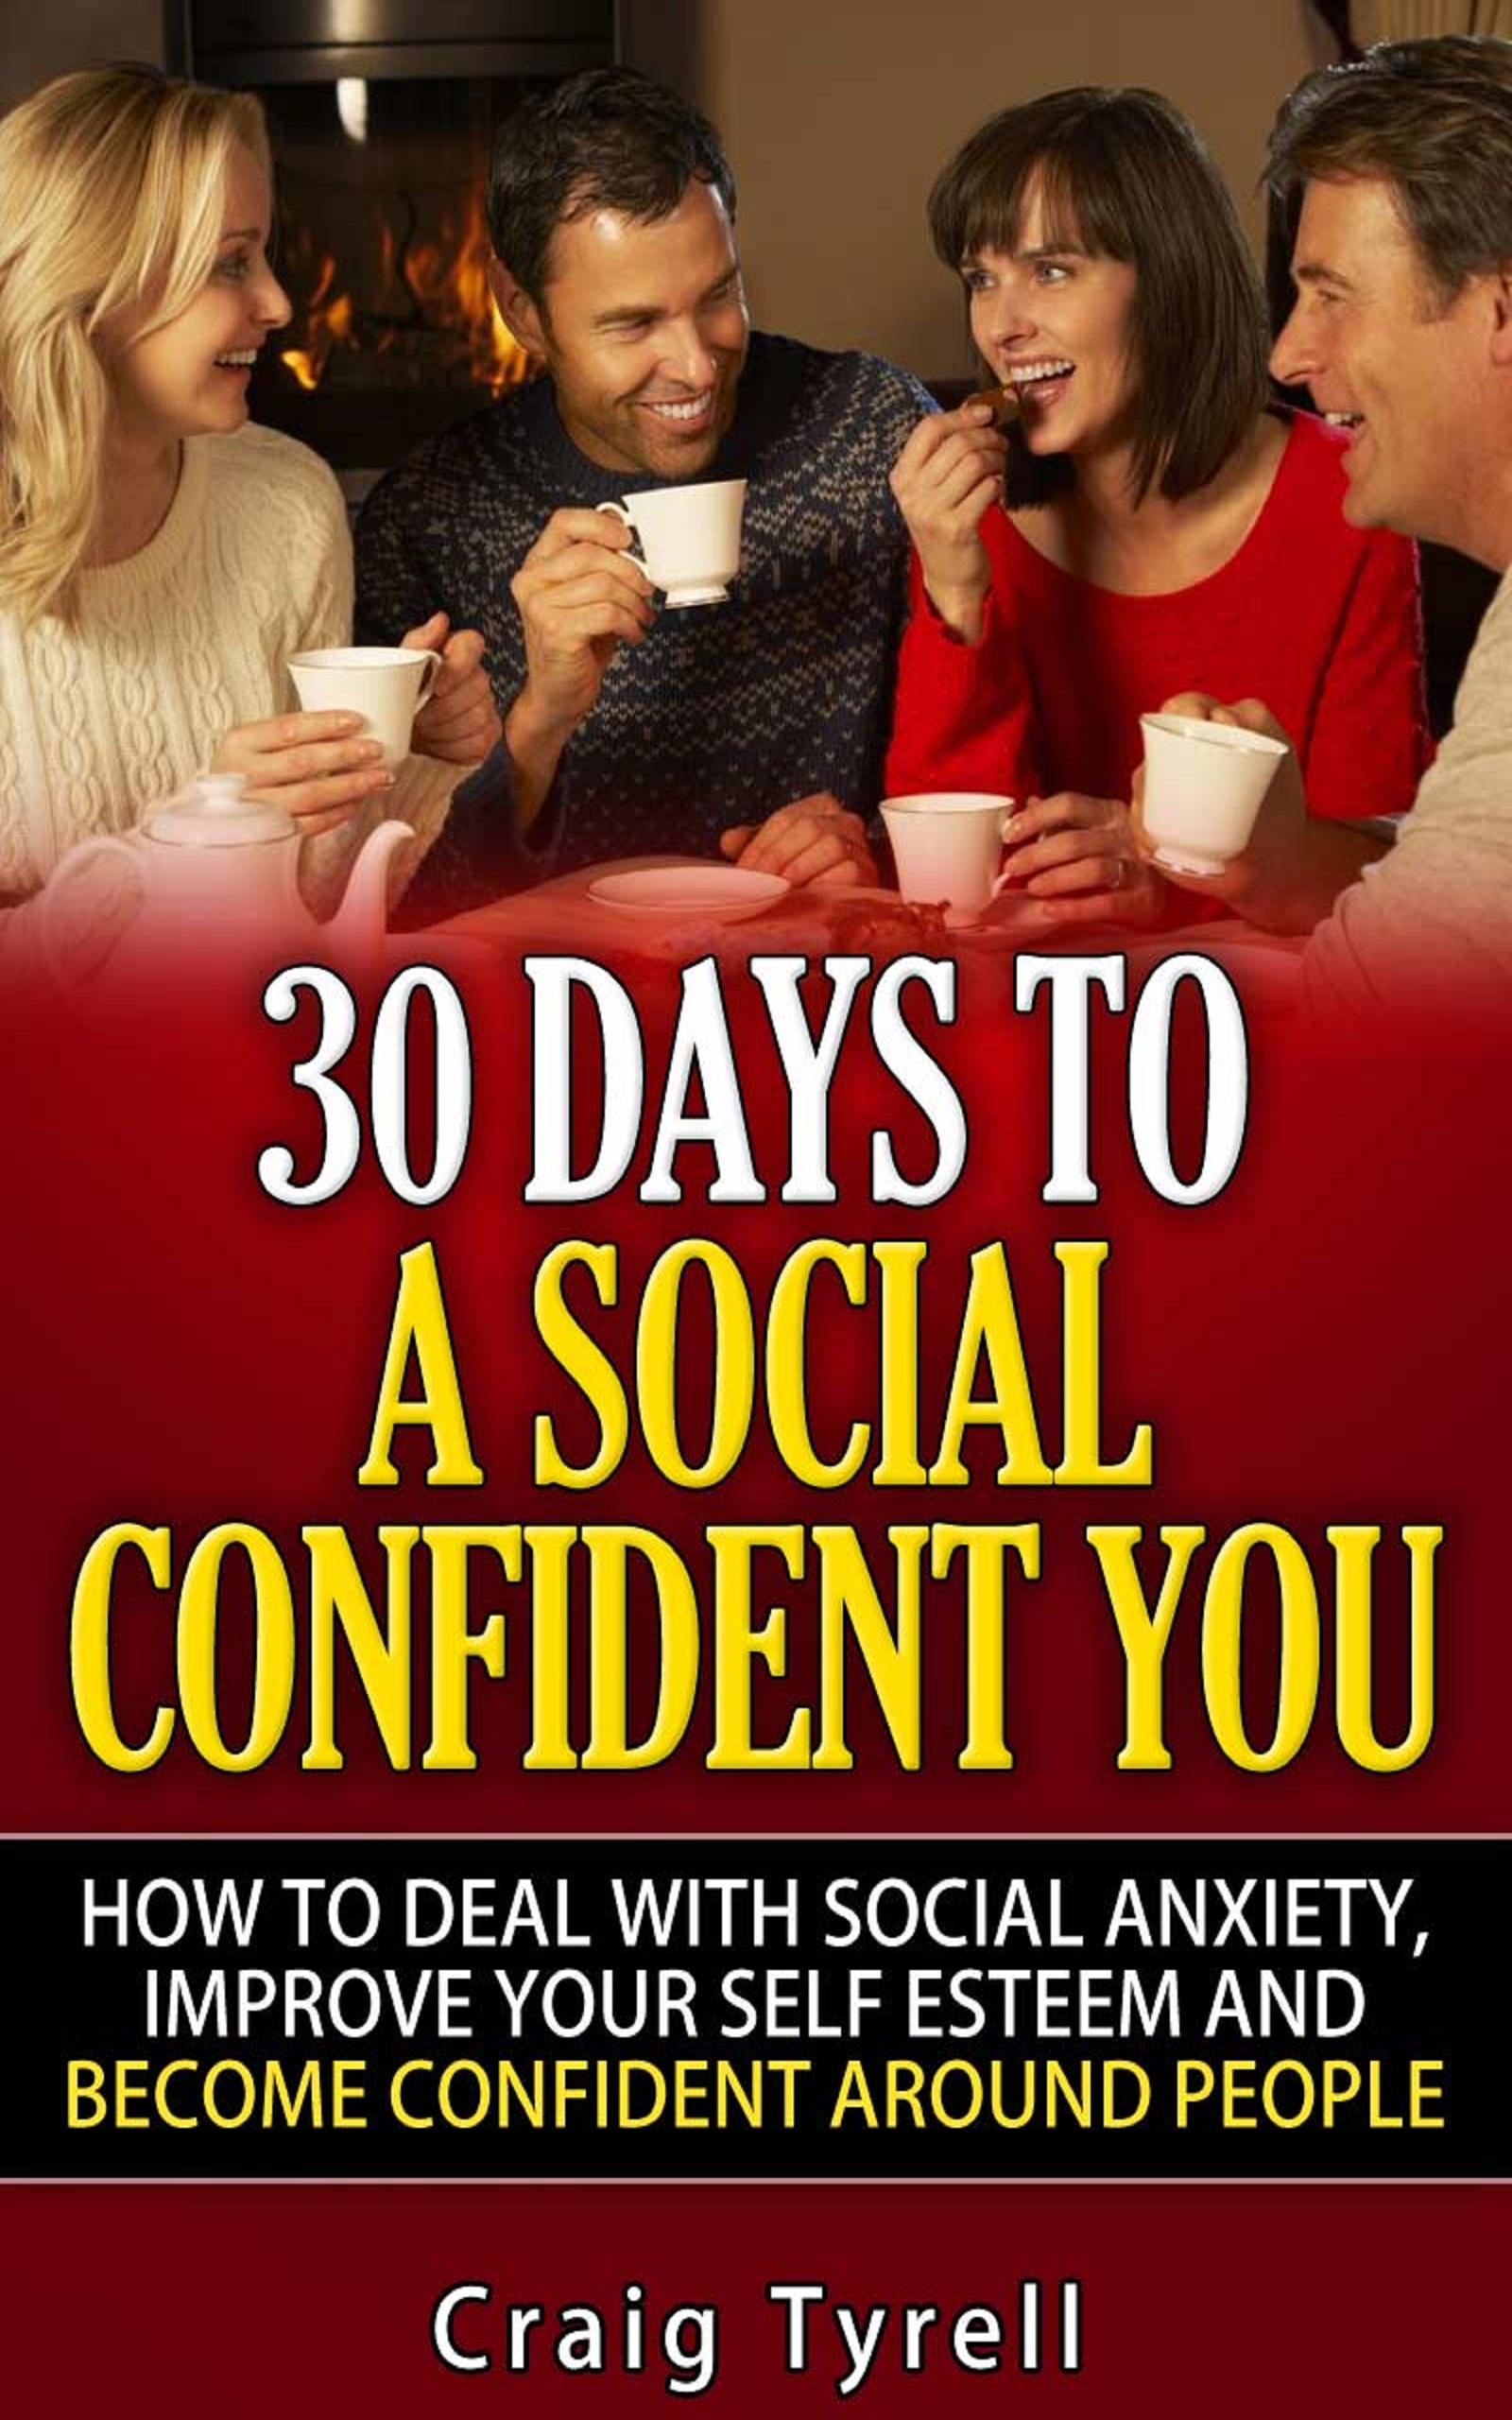 30 Days To A Social Confident You!